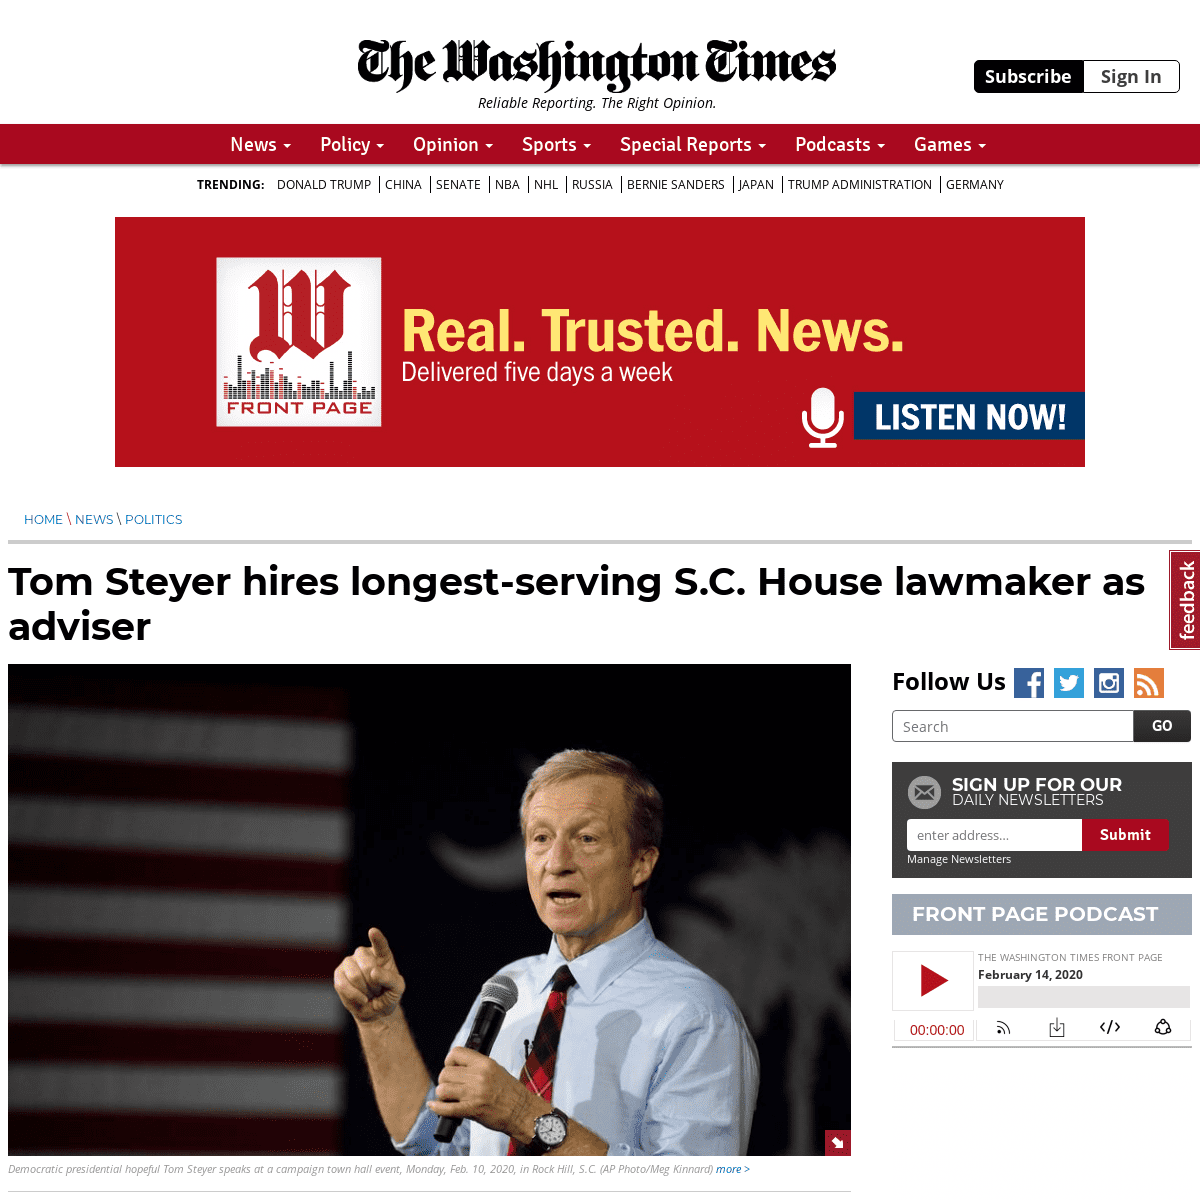 A complete backup of www.washingtontimes.com/news/2020/feb/12/tom-steyer-hires-longest-serving-sc-house-lawmaker/